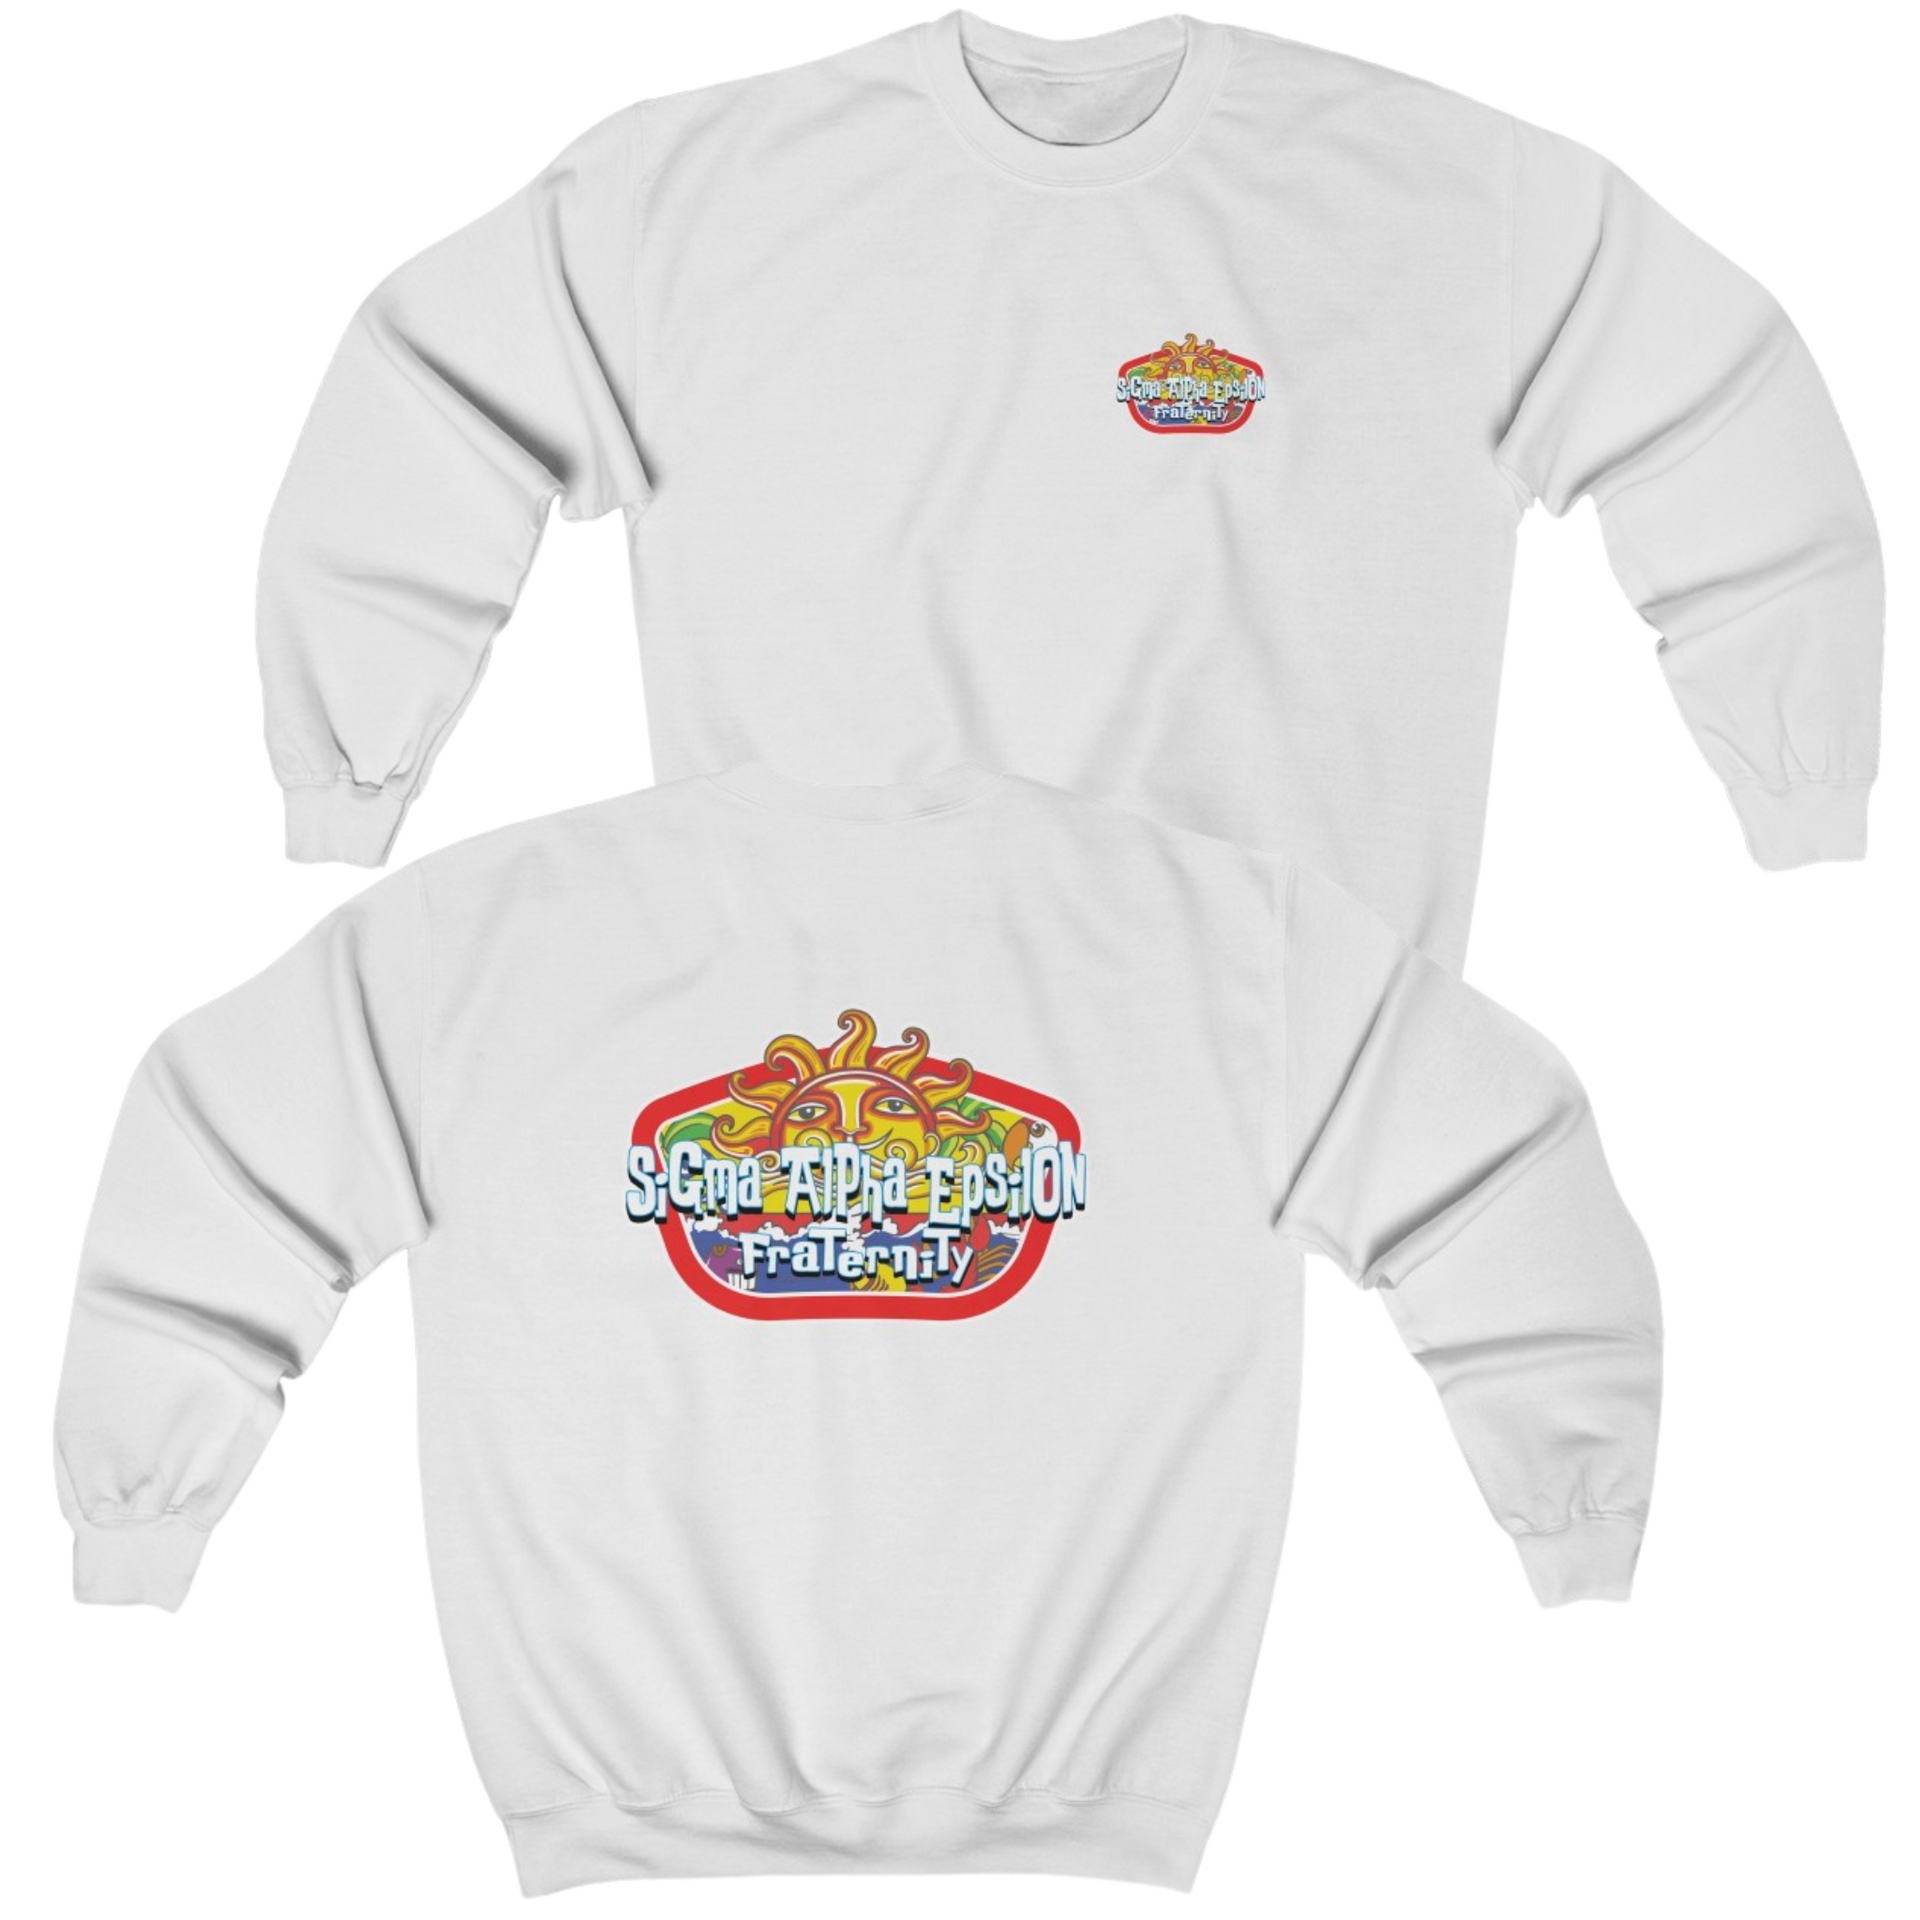 White Sigma Alpha Epsilon Graphic Crewneck Sweatshirt | Summer Sol | Sigma Alpha Epsilon Clothing and Merchandise